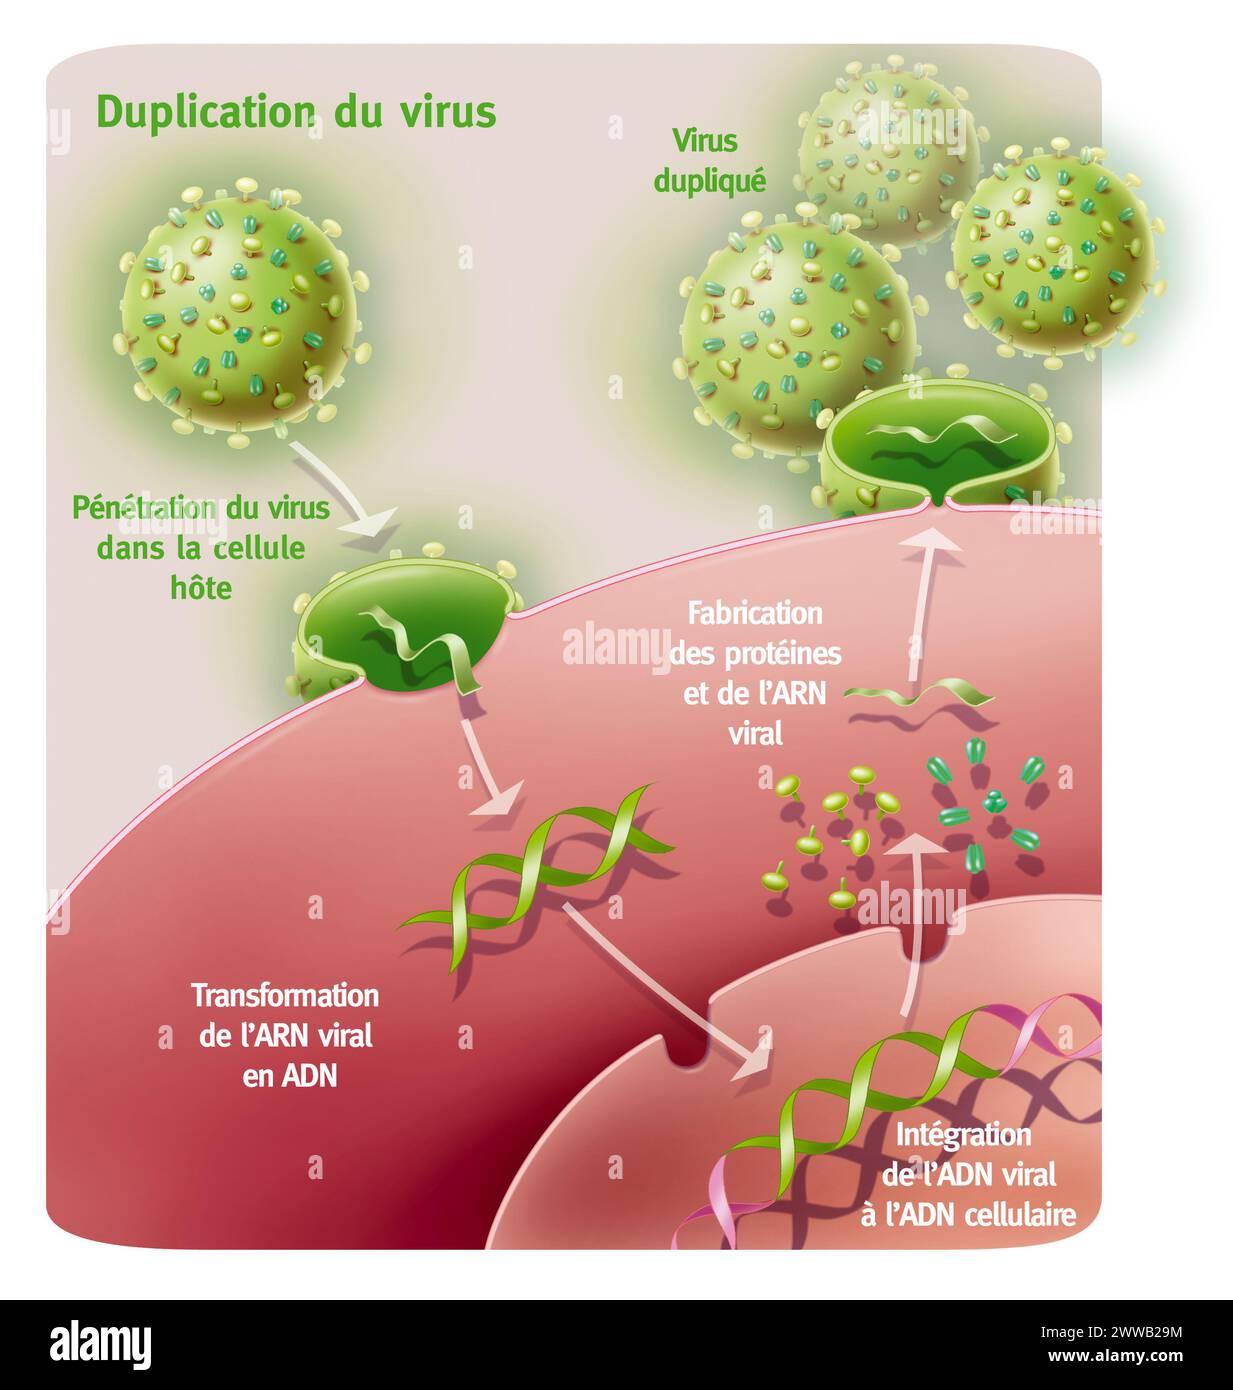 Duplication of a retrovirus type virus. Representation of the penetration and duplication of an AIDS-type retrovirus thanks to a host cell. Stock Photo